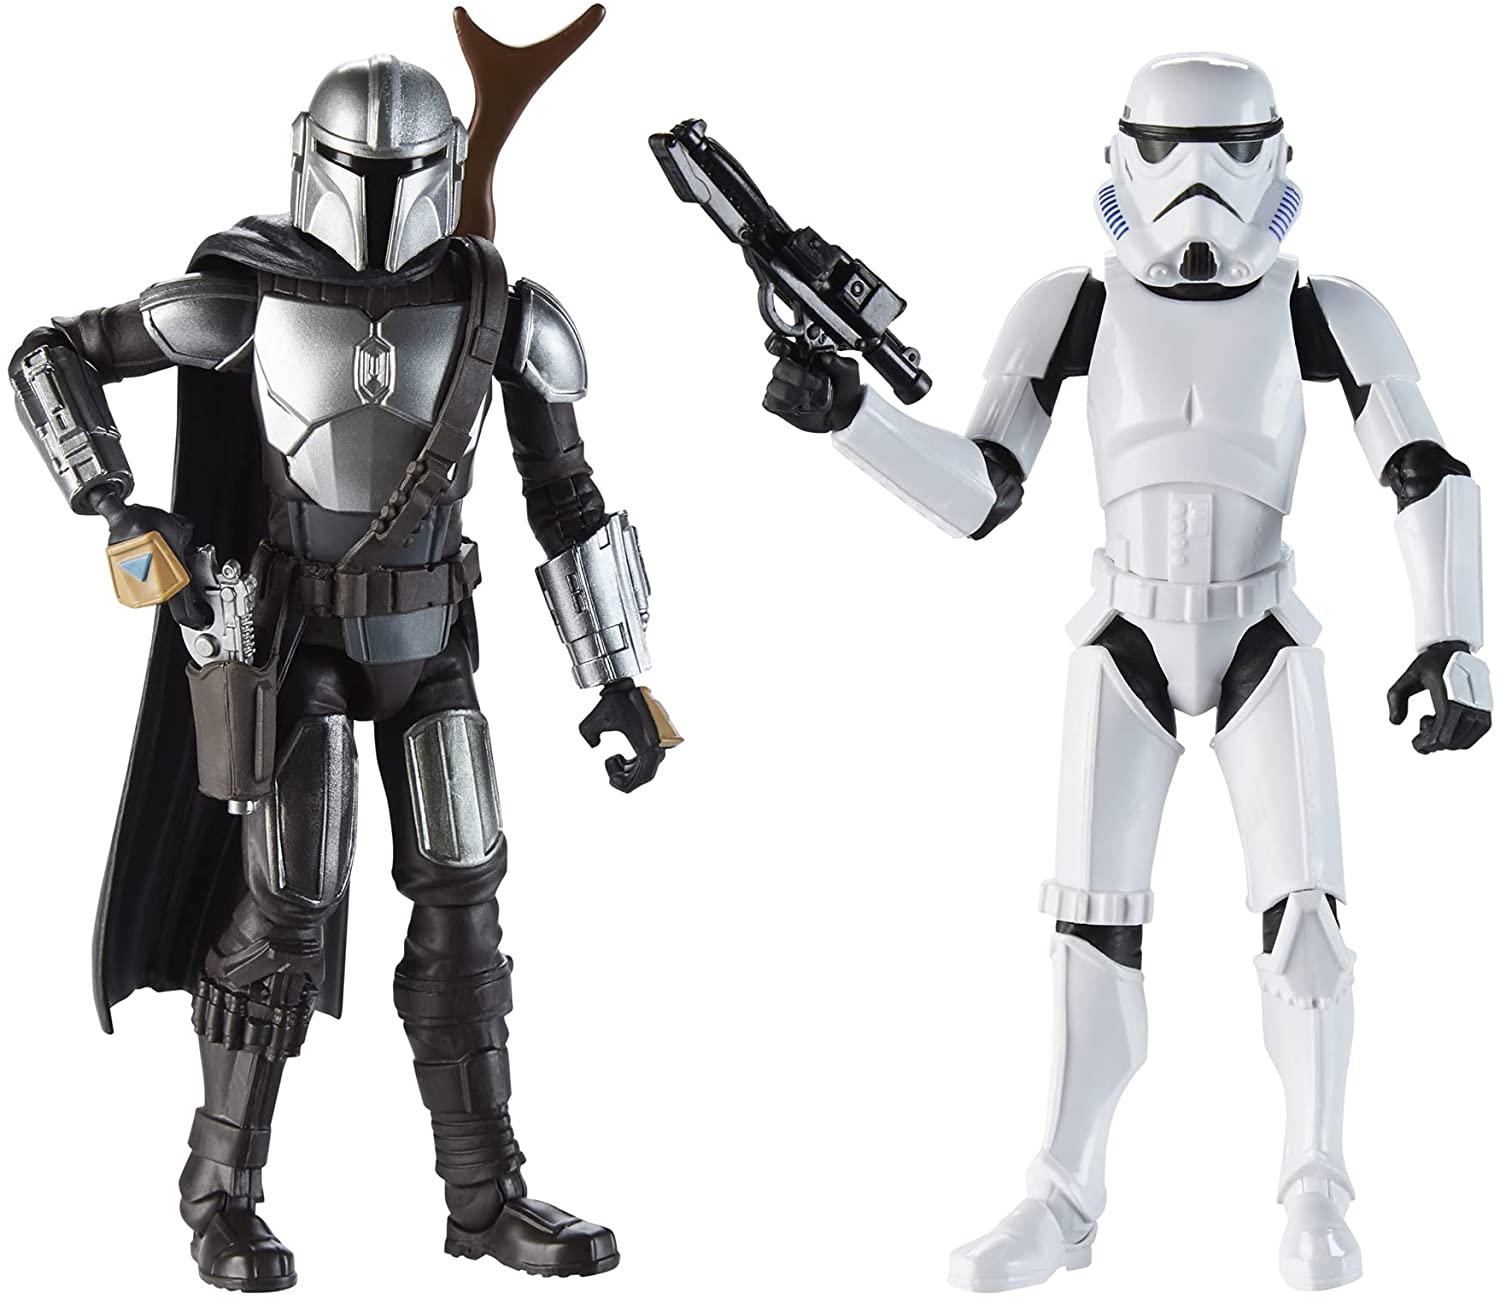 TM SWGOA Mando (Din Djarin) and Imperial Stormtrooper Figure 2-Pack 6